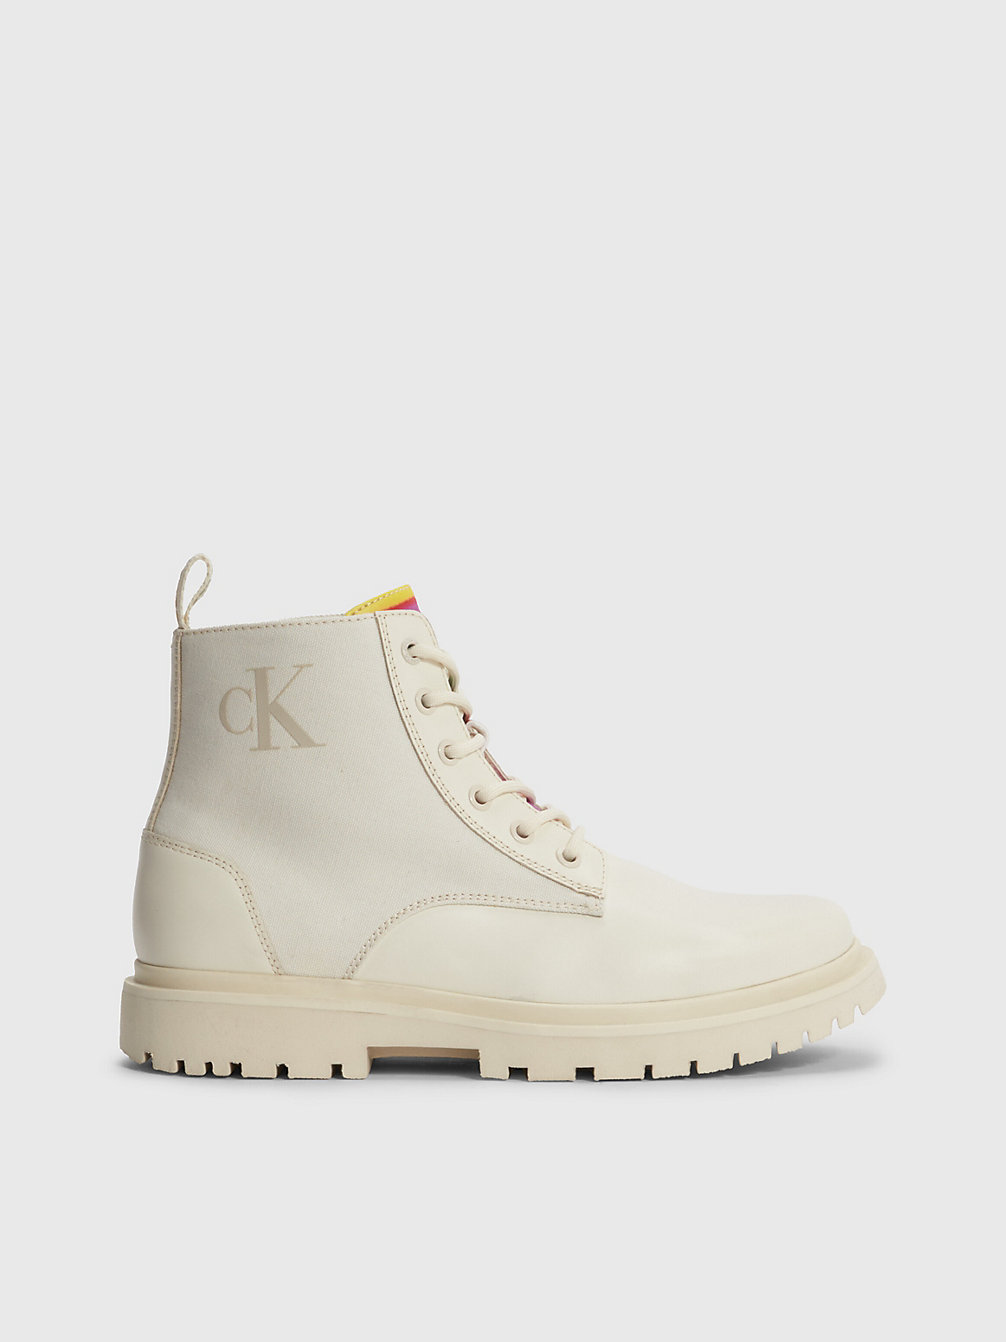 CREAMY WHITE Leather Boots - Pride undefined women Calvin Klein